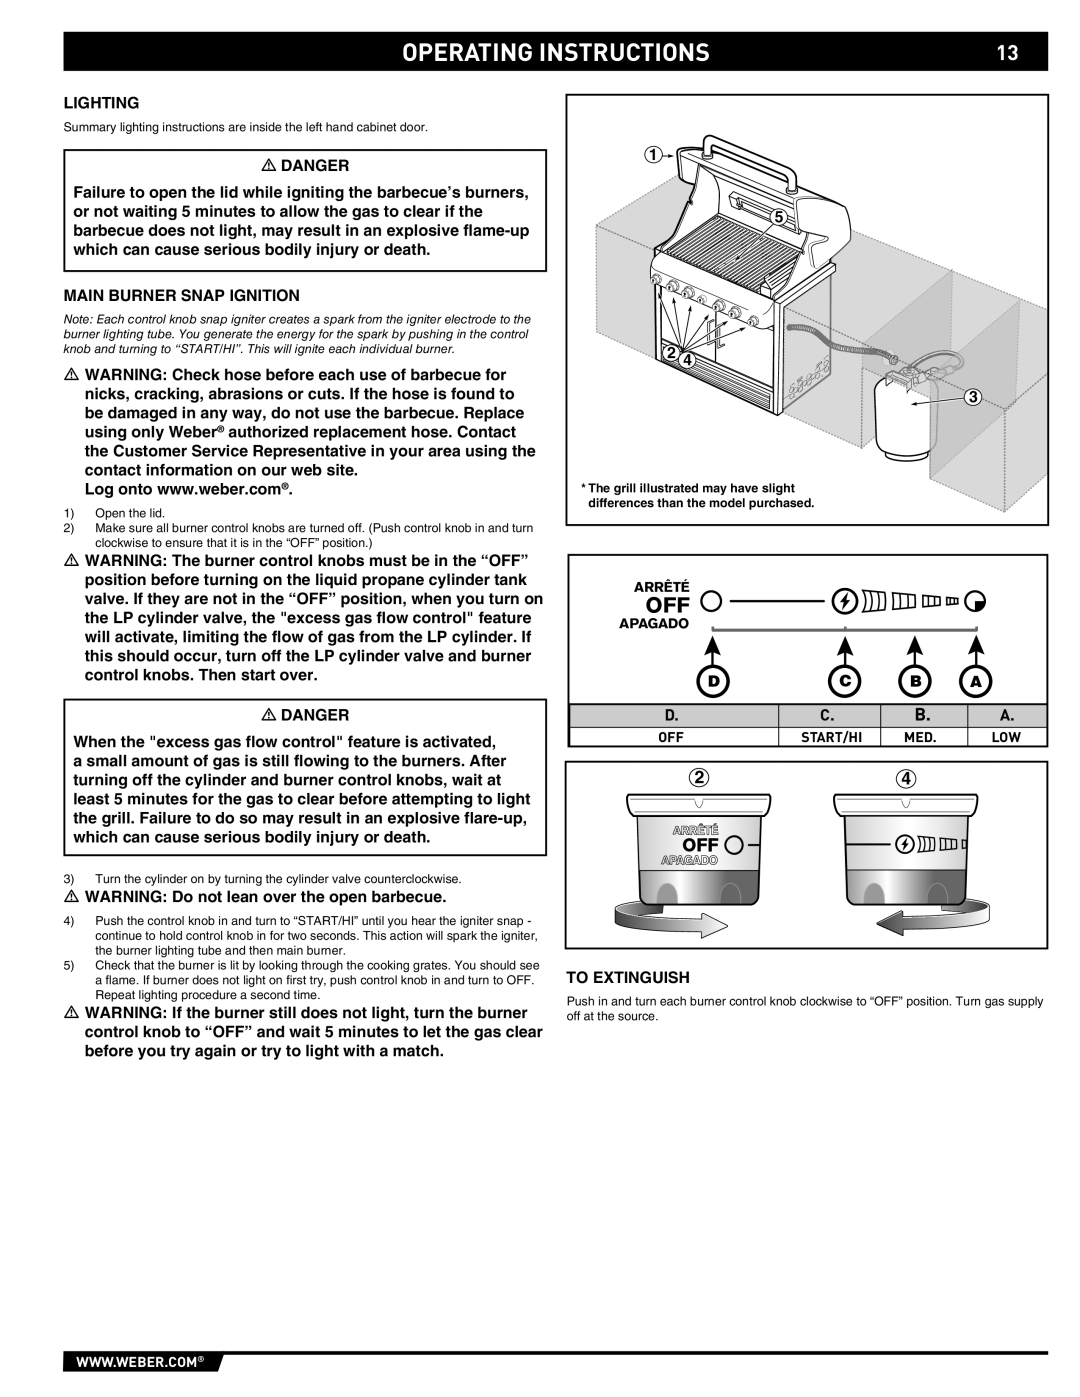 Weber S-460 manual Operating Instructions, D C B A 